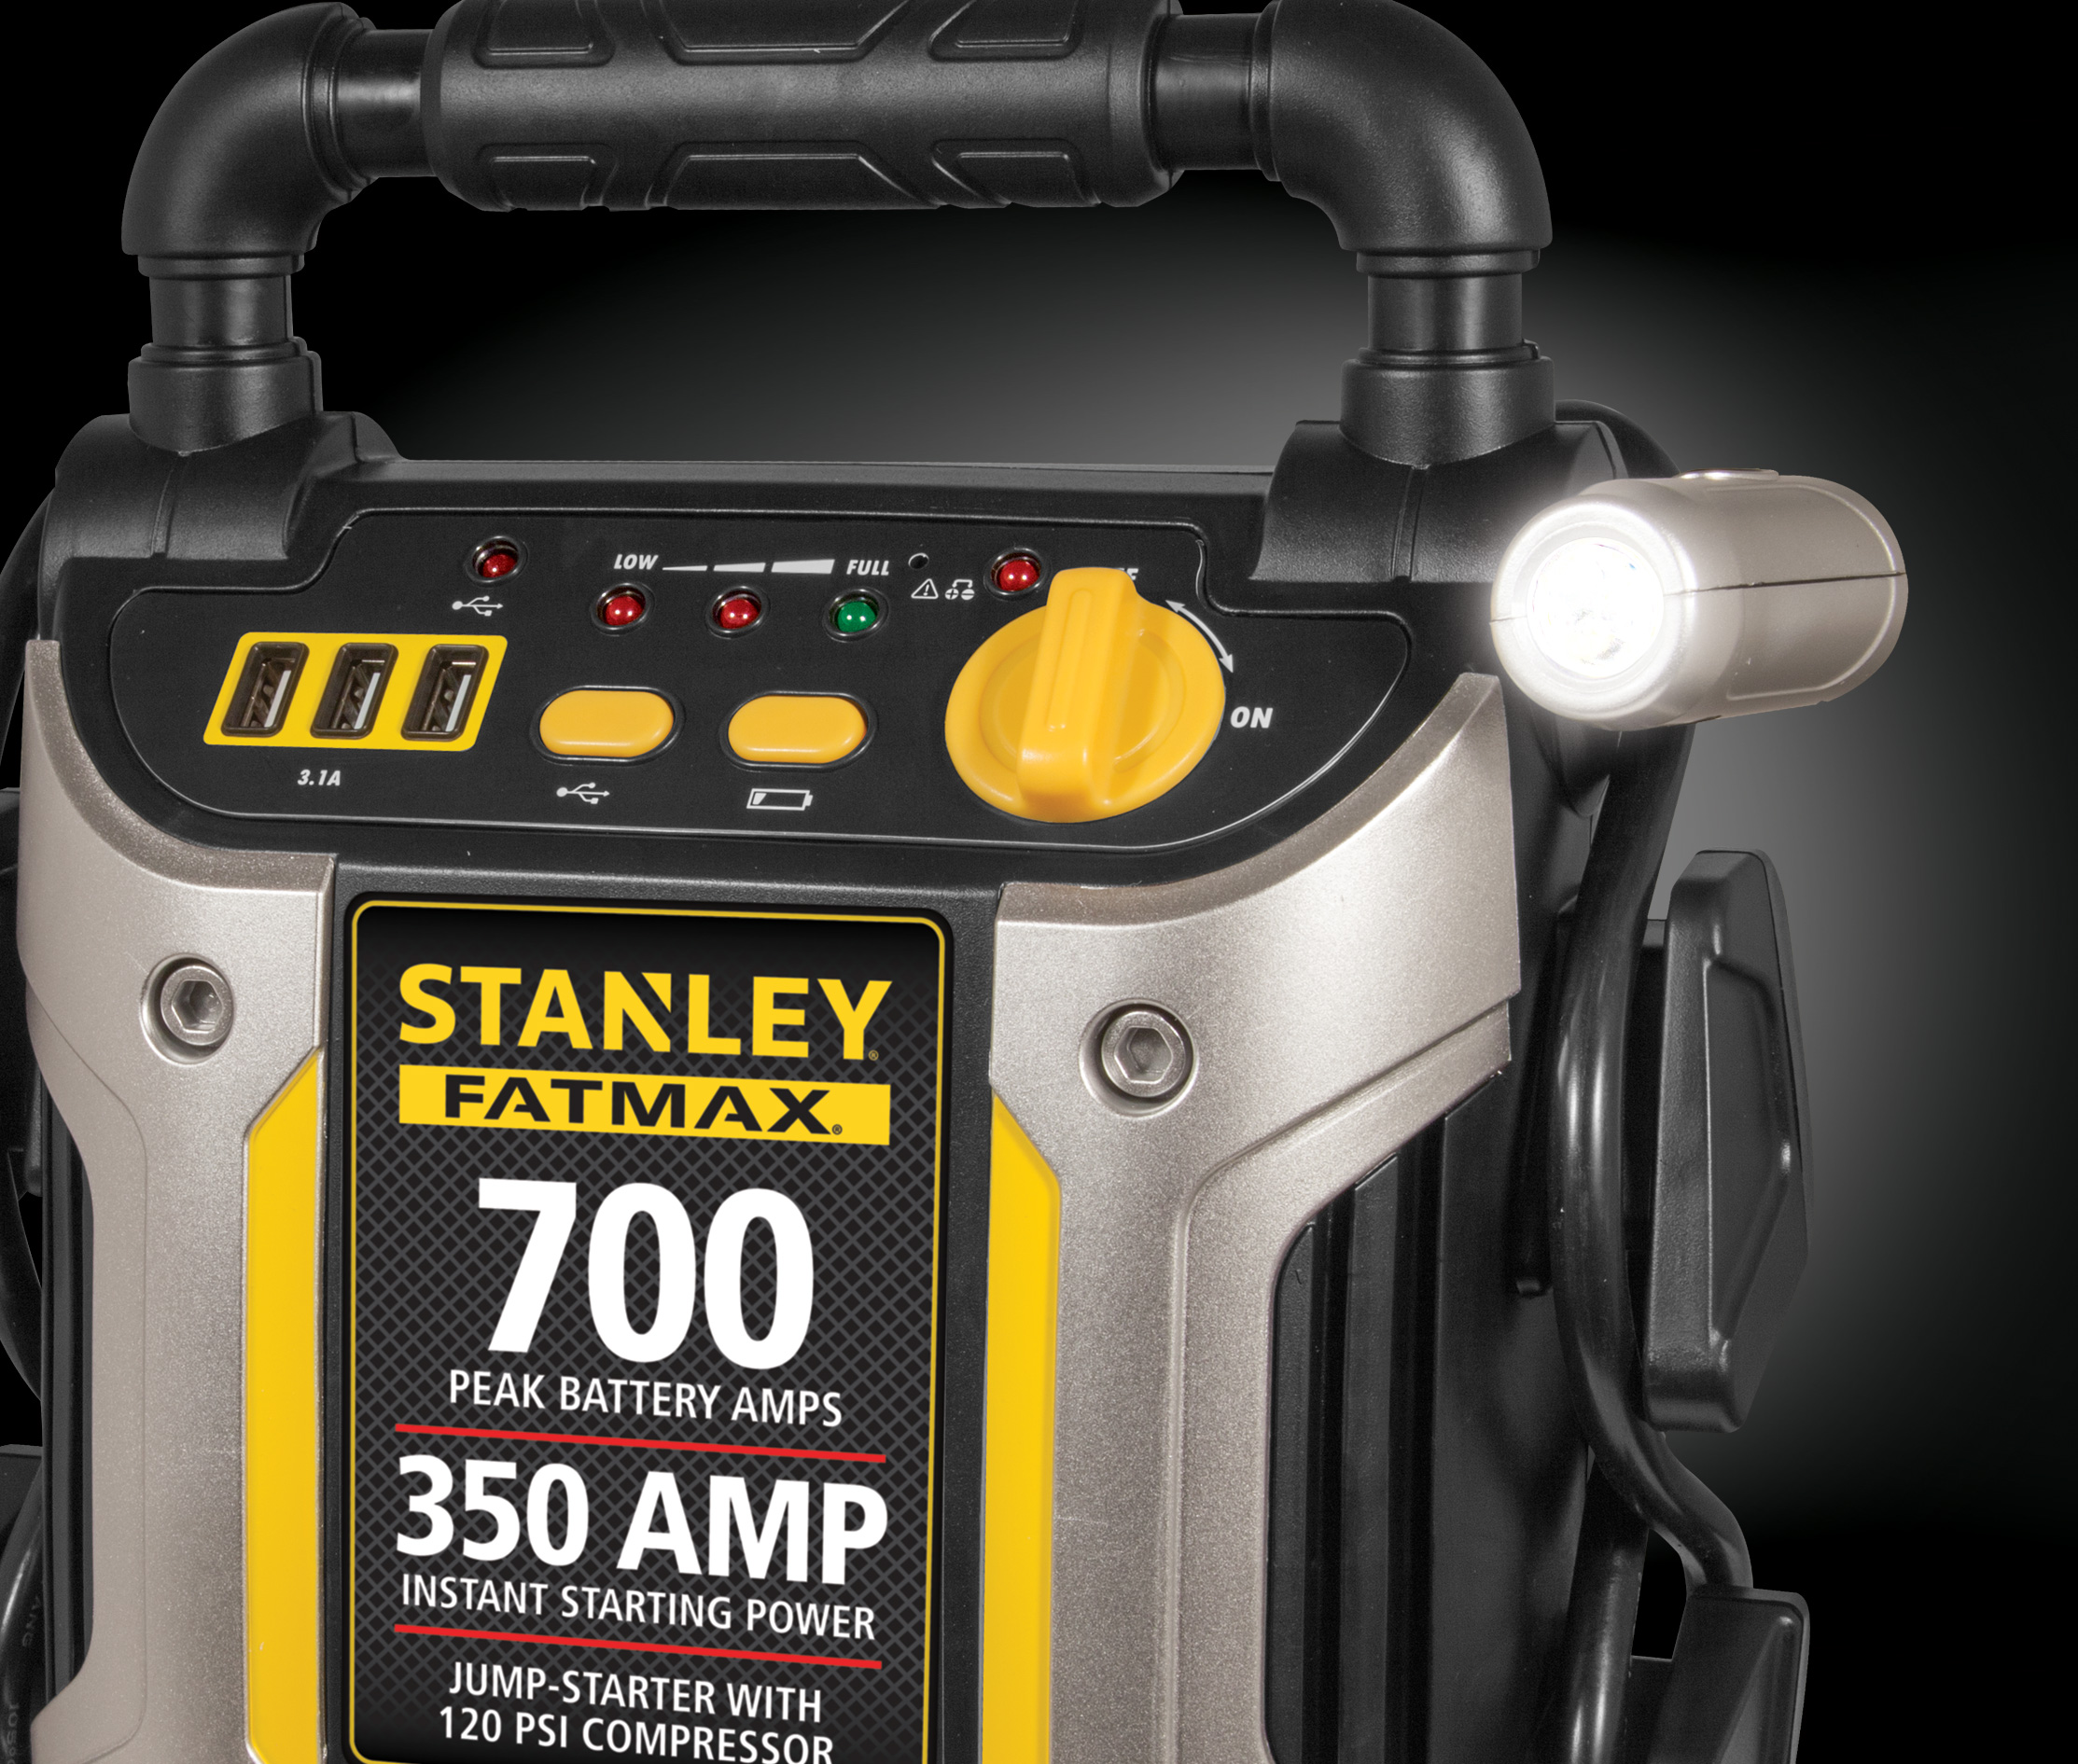 STANLEY Fatmax 700/350 Amp Jump Starter with 120 Psi Compressor (J7CS) - image 3 of 8